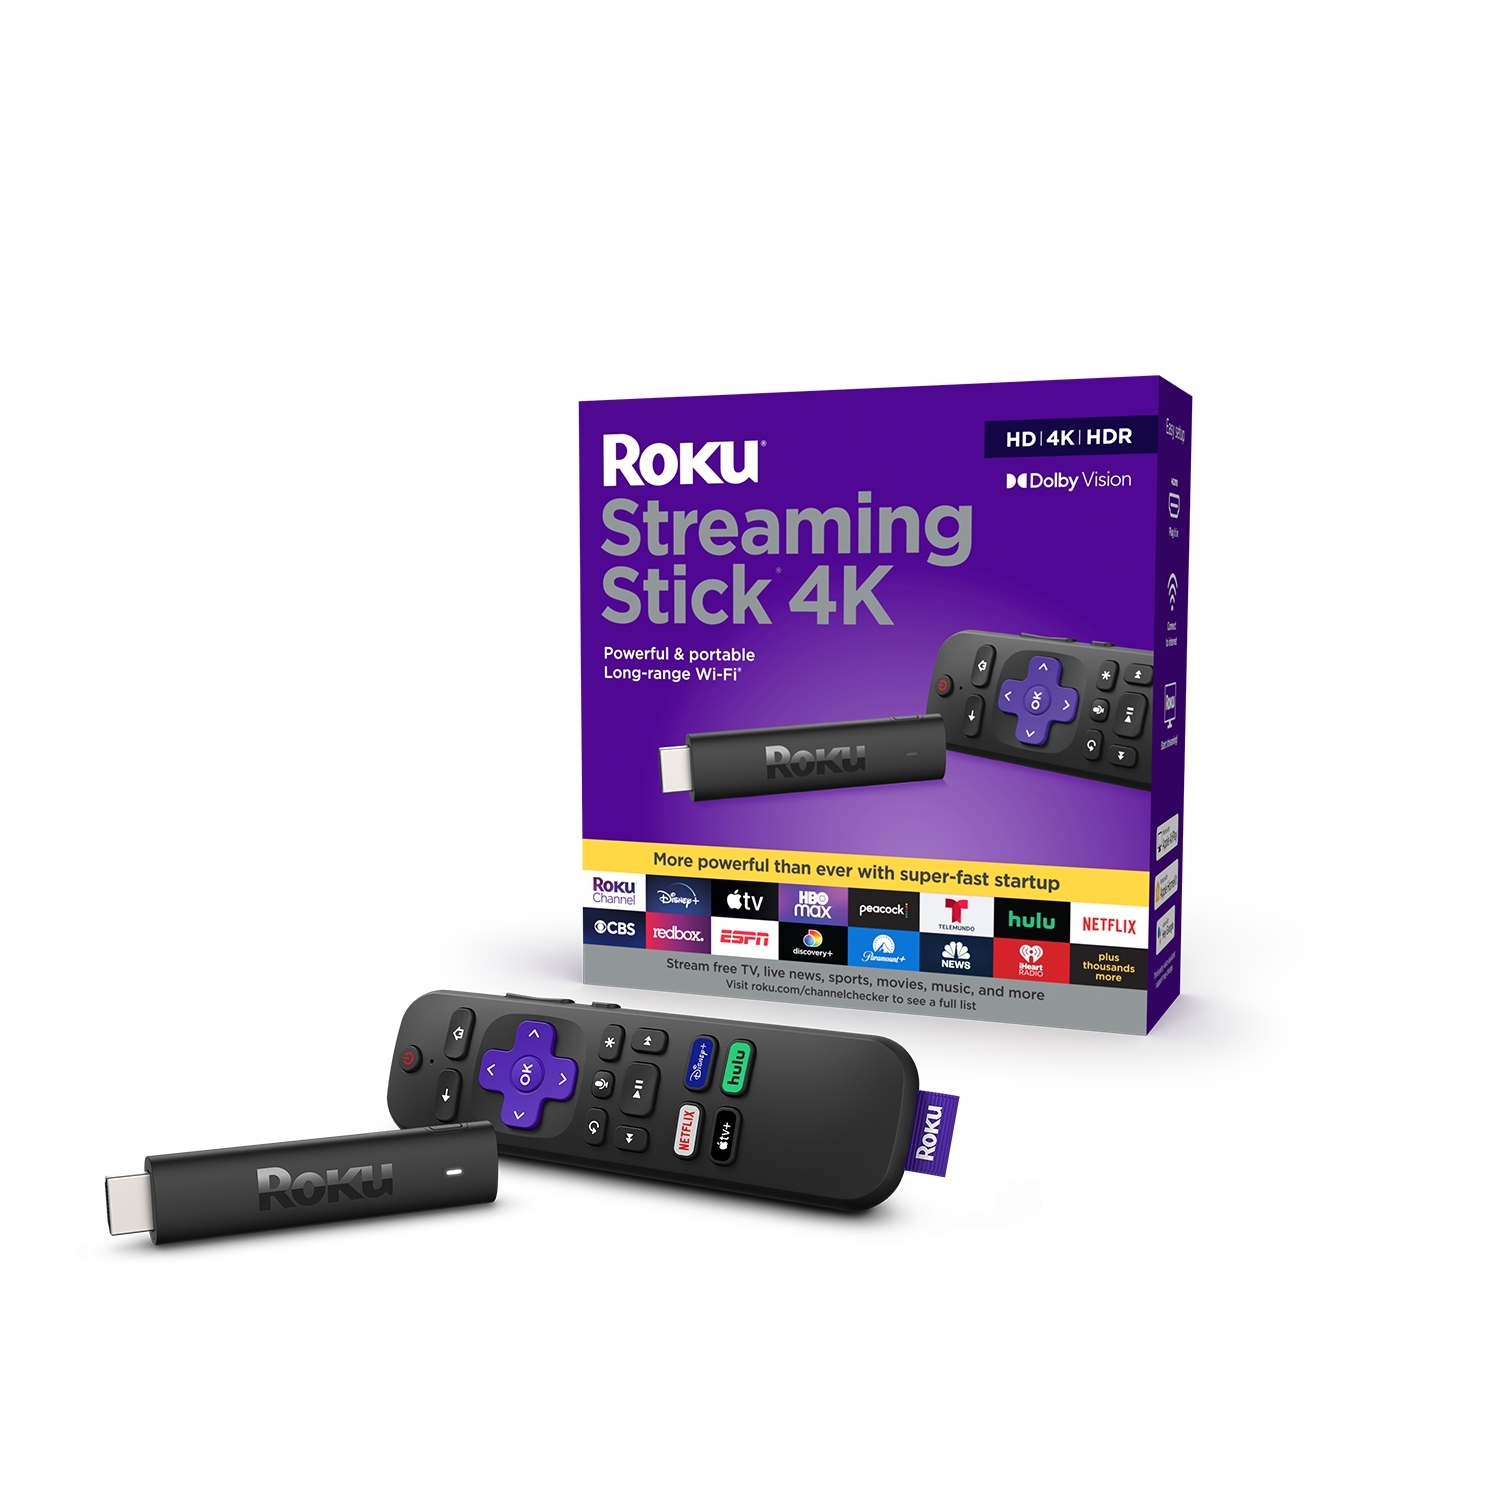 Roku Introduces All-New Roku Streaming Stick 4K and Roku Streaming Stick 4K+ Business Wire